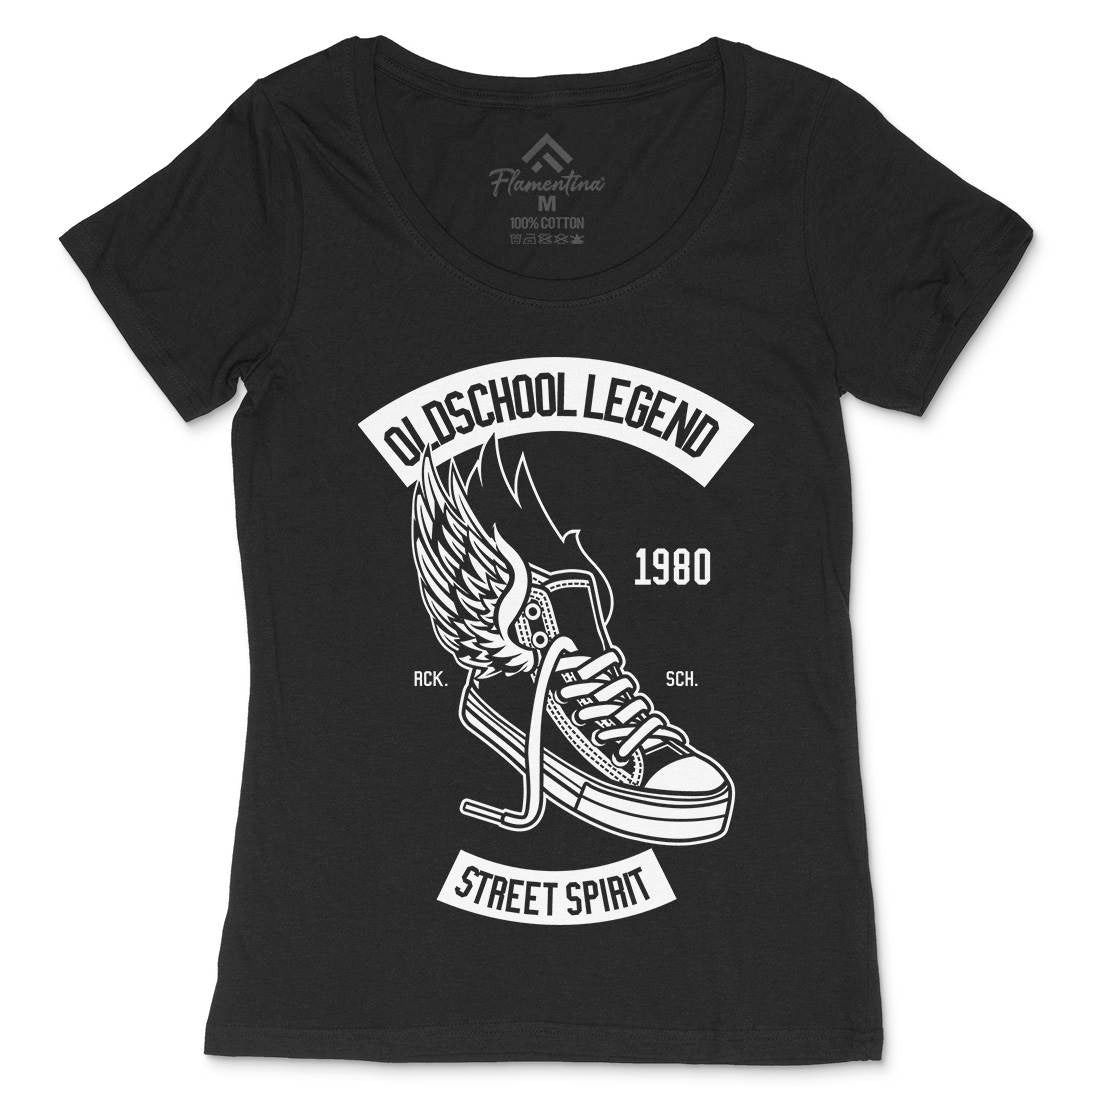 Oldschool Legend Womens Scoop Neck T-Shirt Retro B594